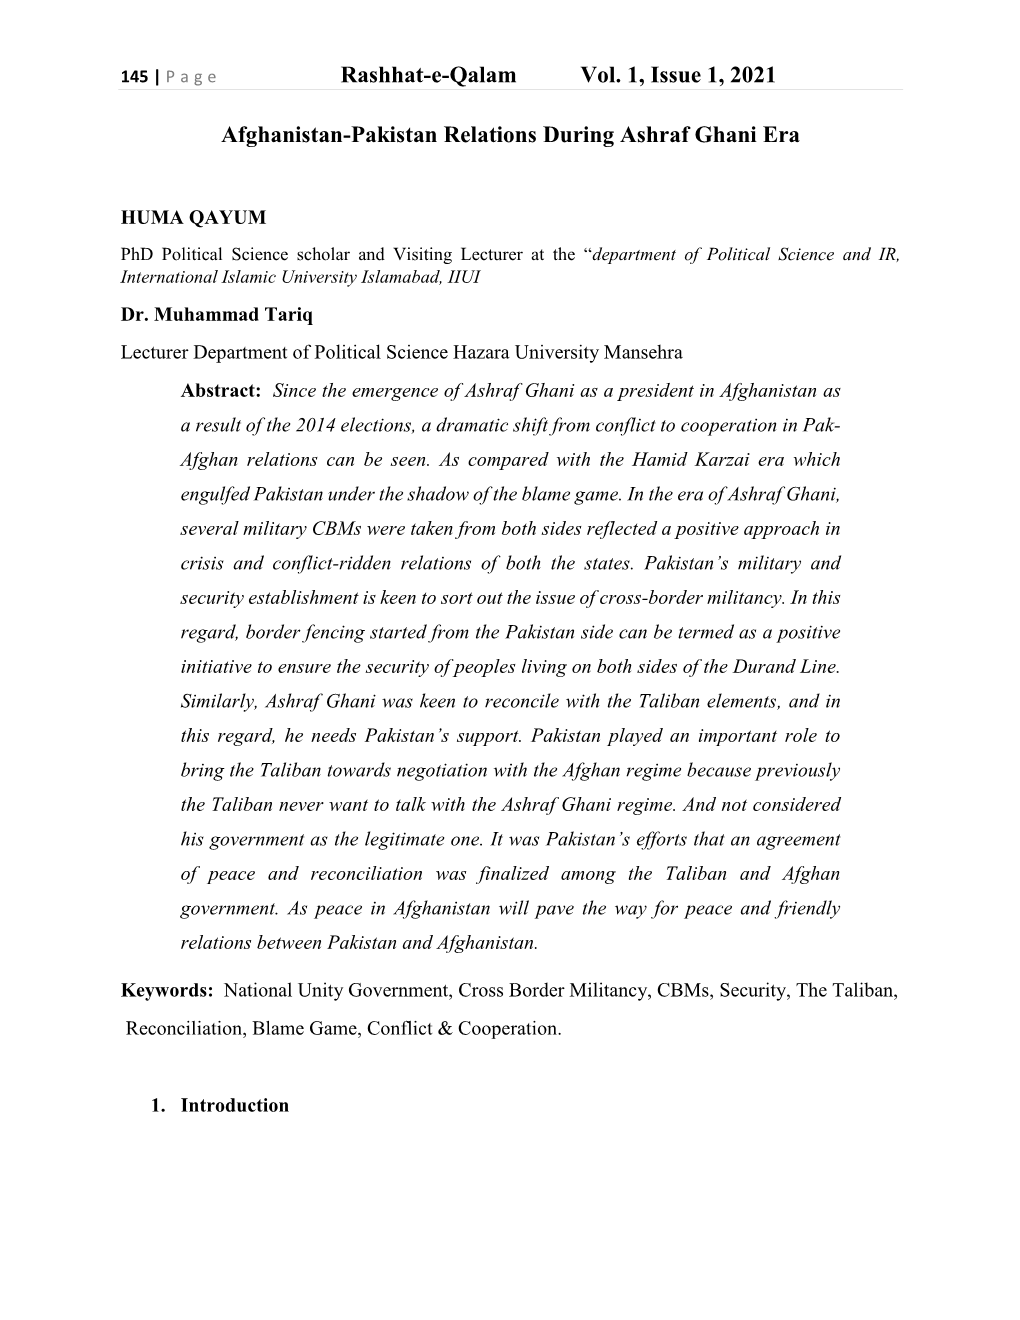 Rashhat-E-Qalam Vol. 1, Issue 1, 2021 Afghanistan-Pakistan Relations During Ashraf Ghani